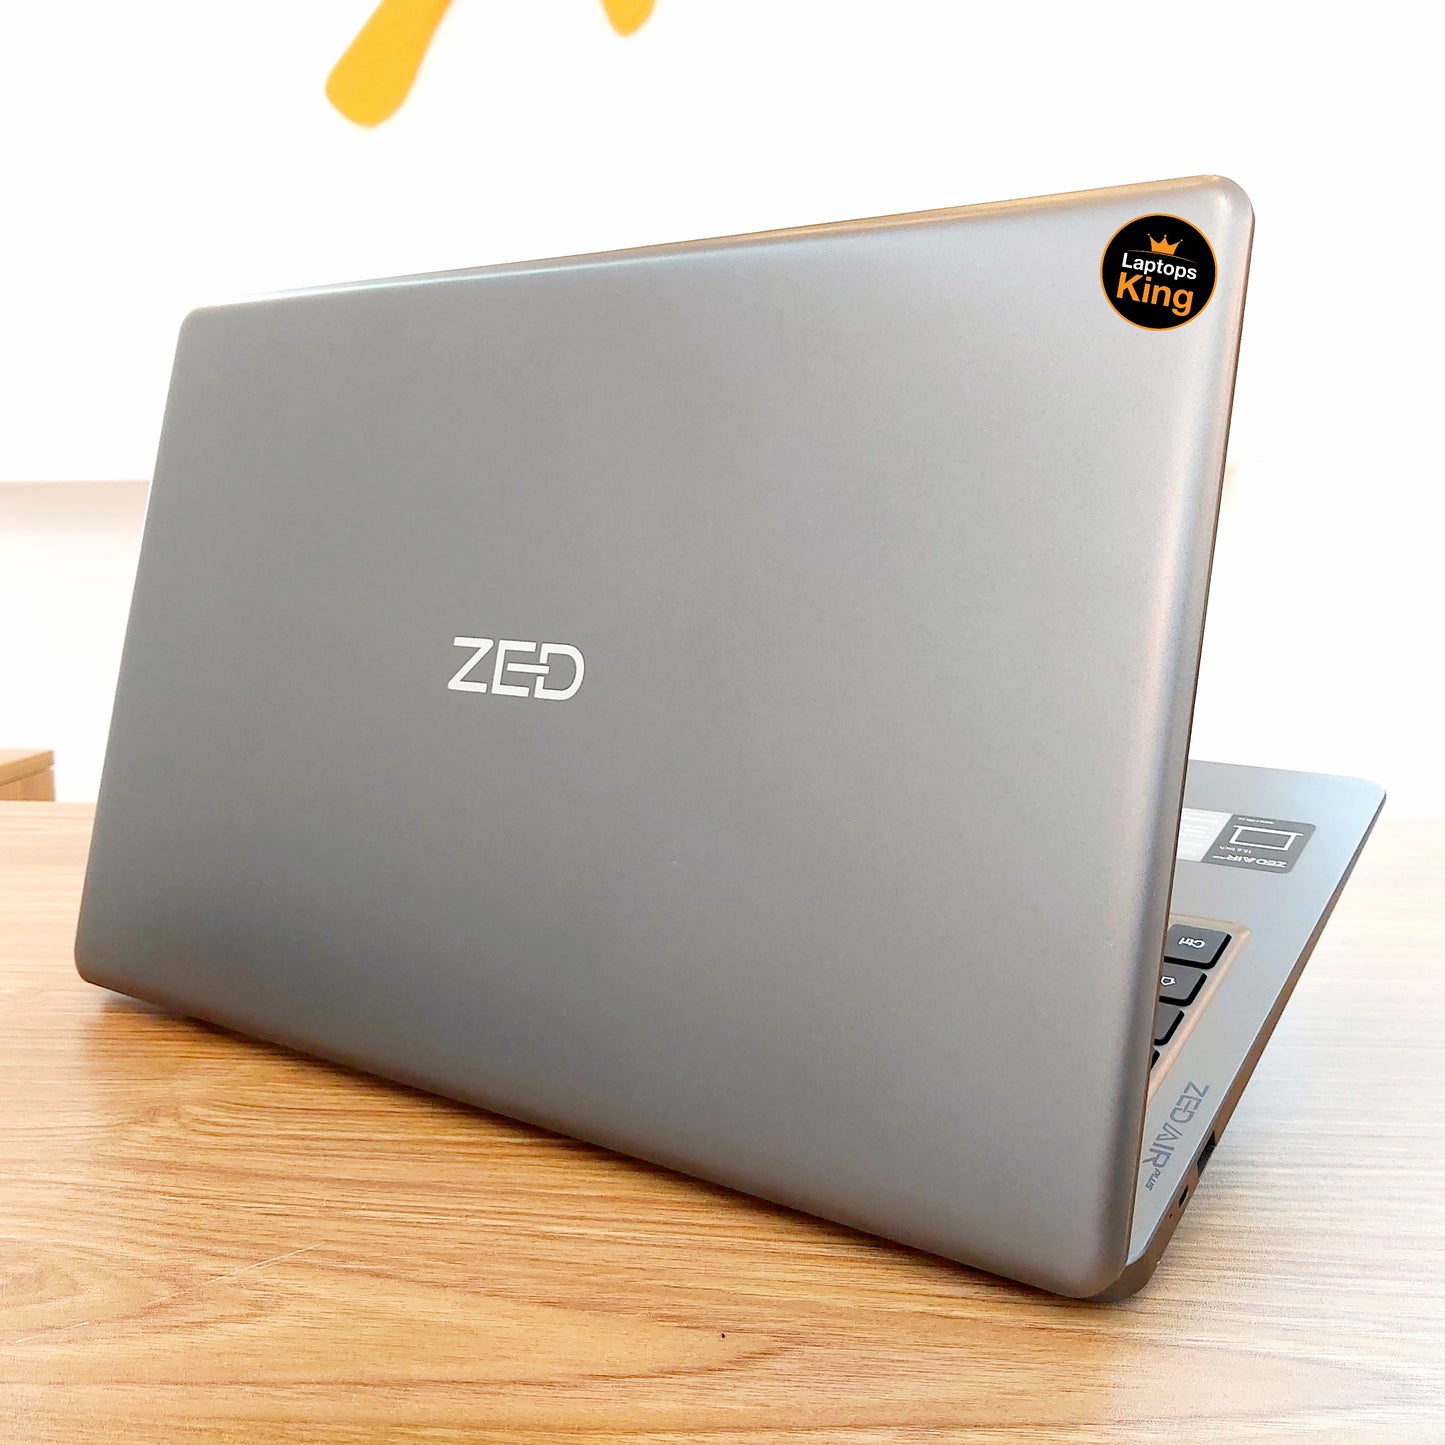 Ilife Zed Air Plus Laptop (Used Like New)